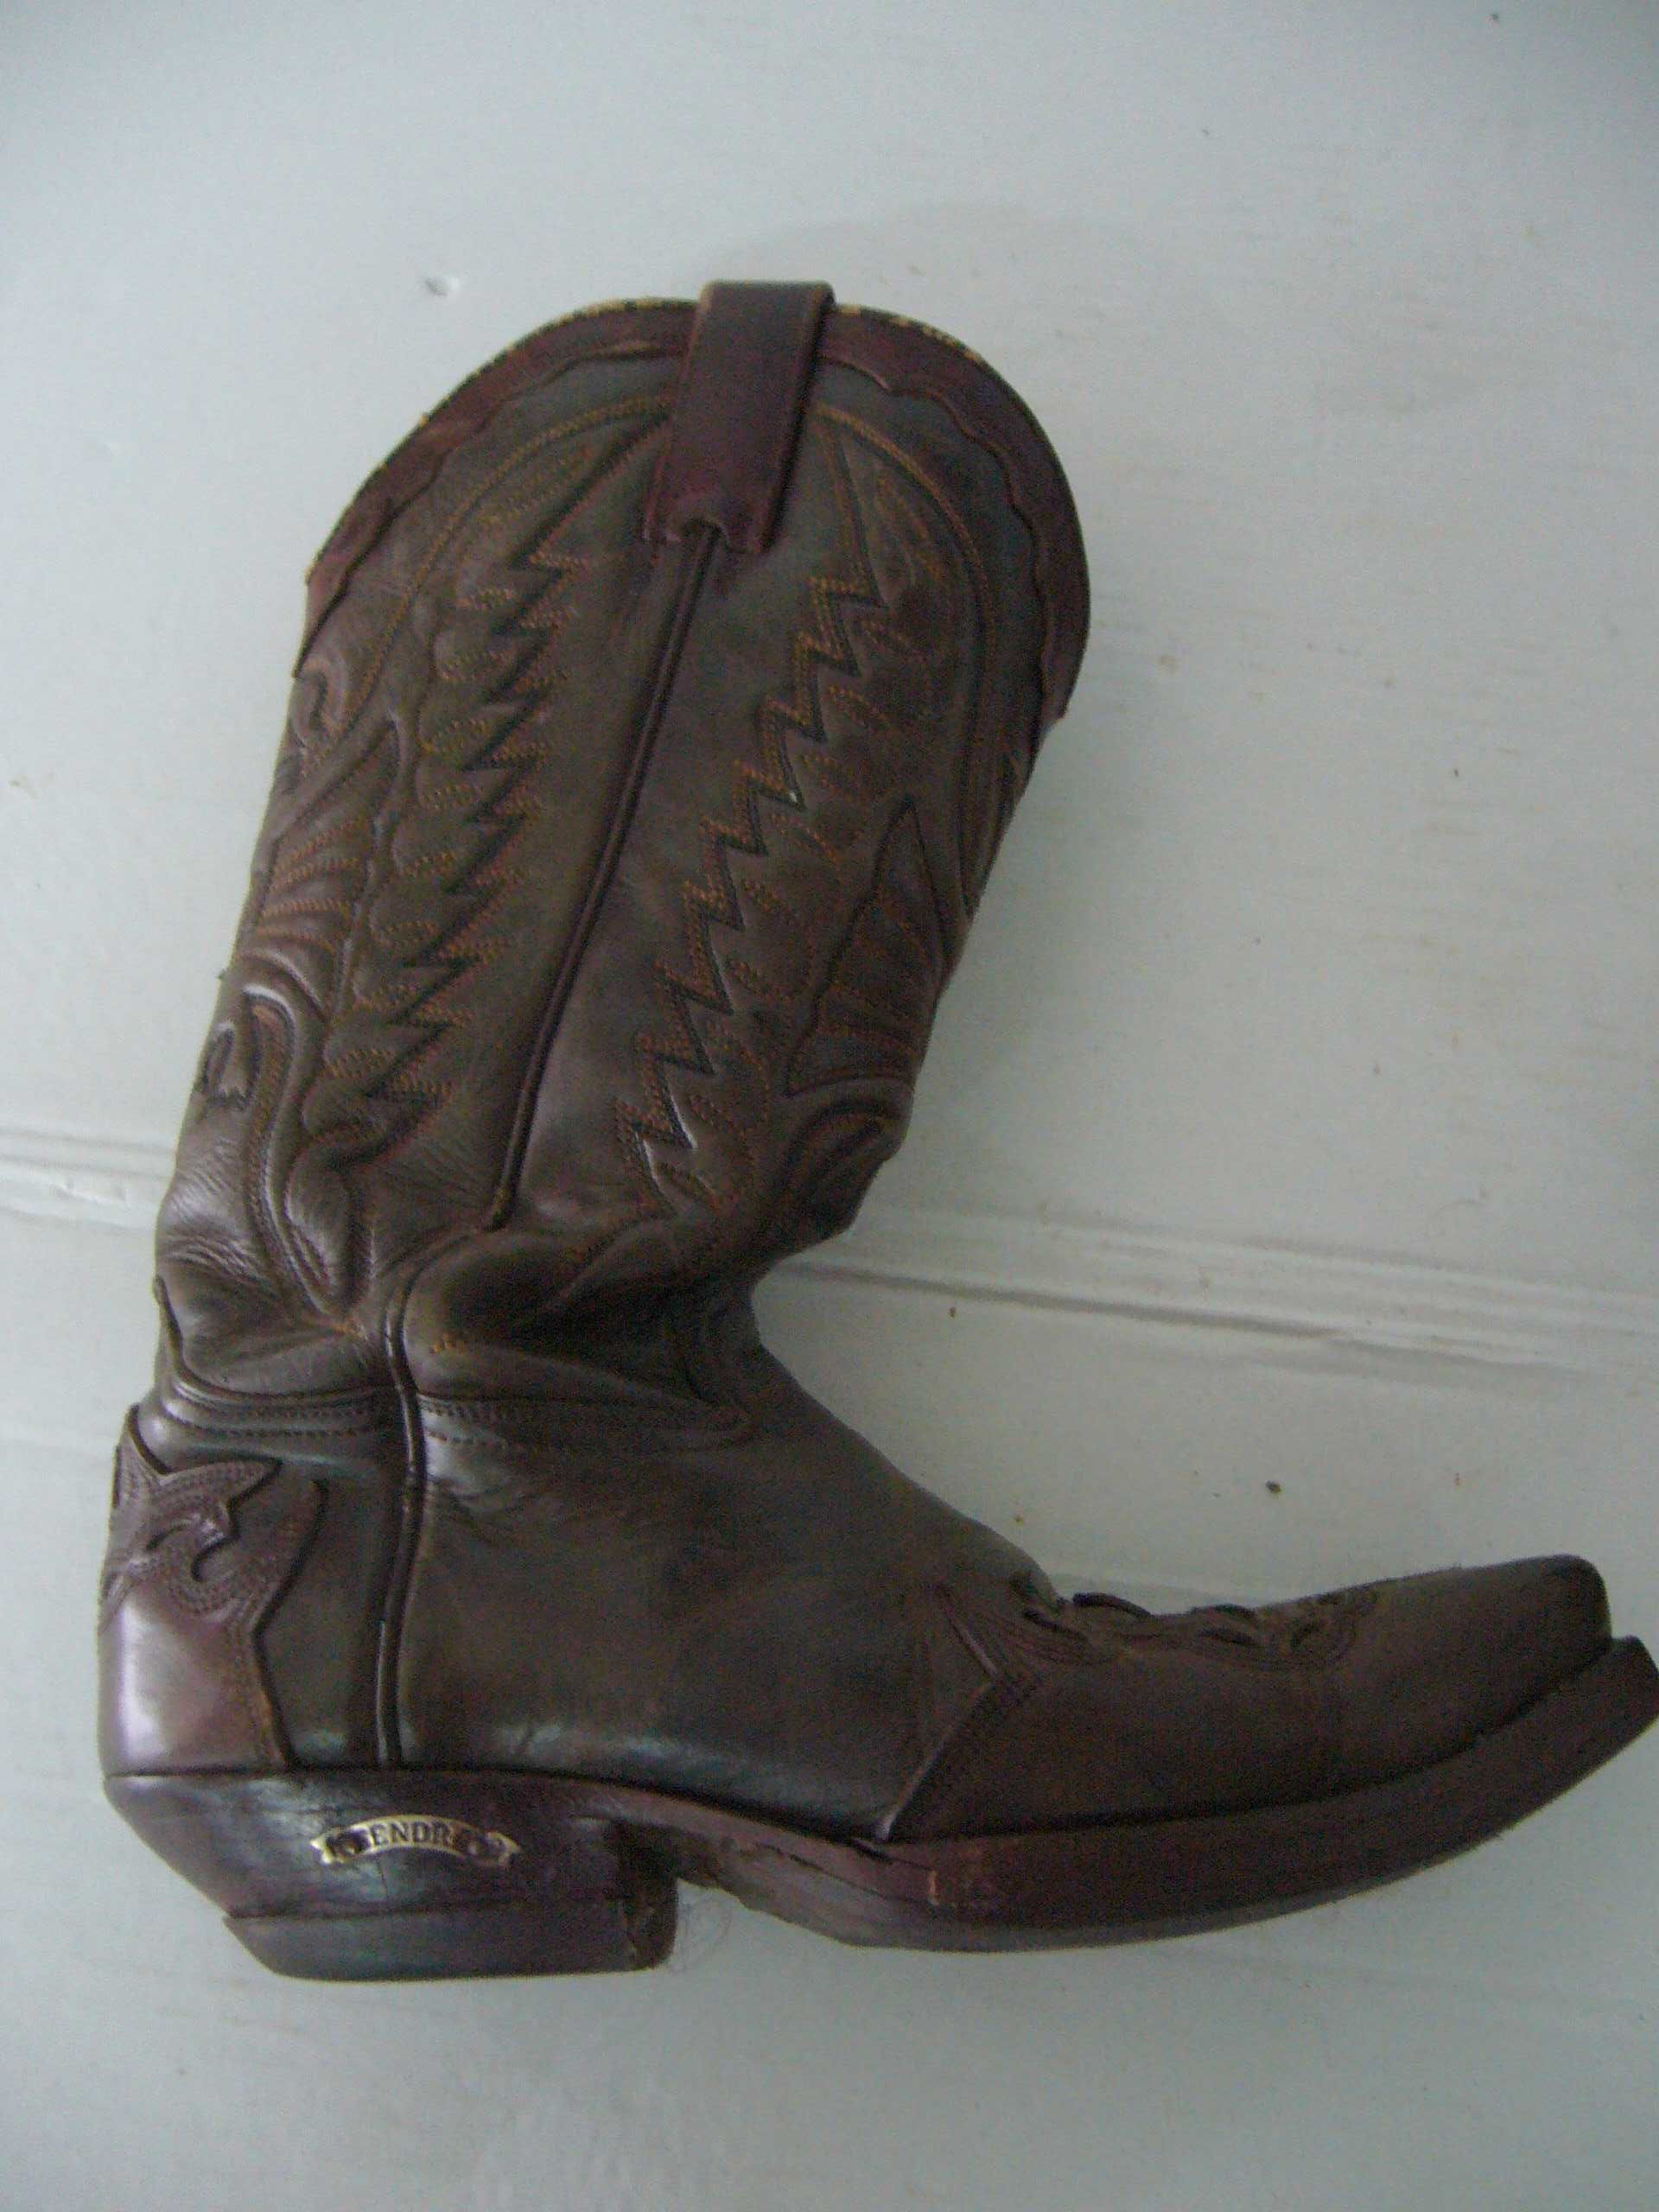 Vendo botas texanas marca Sendra